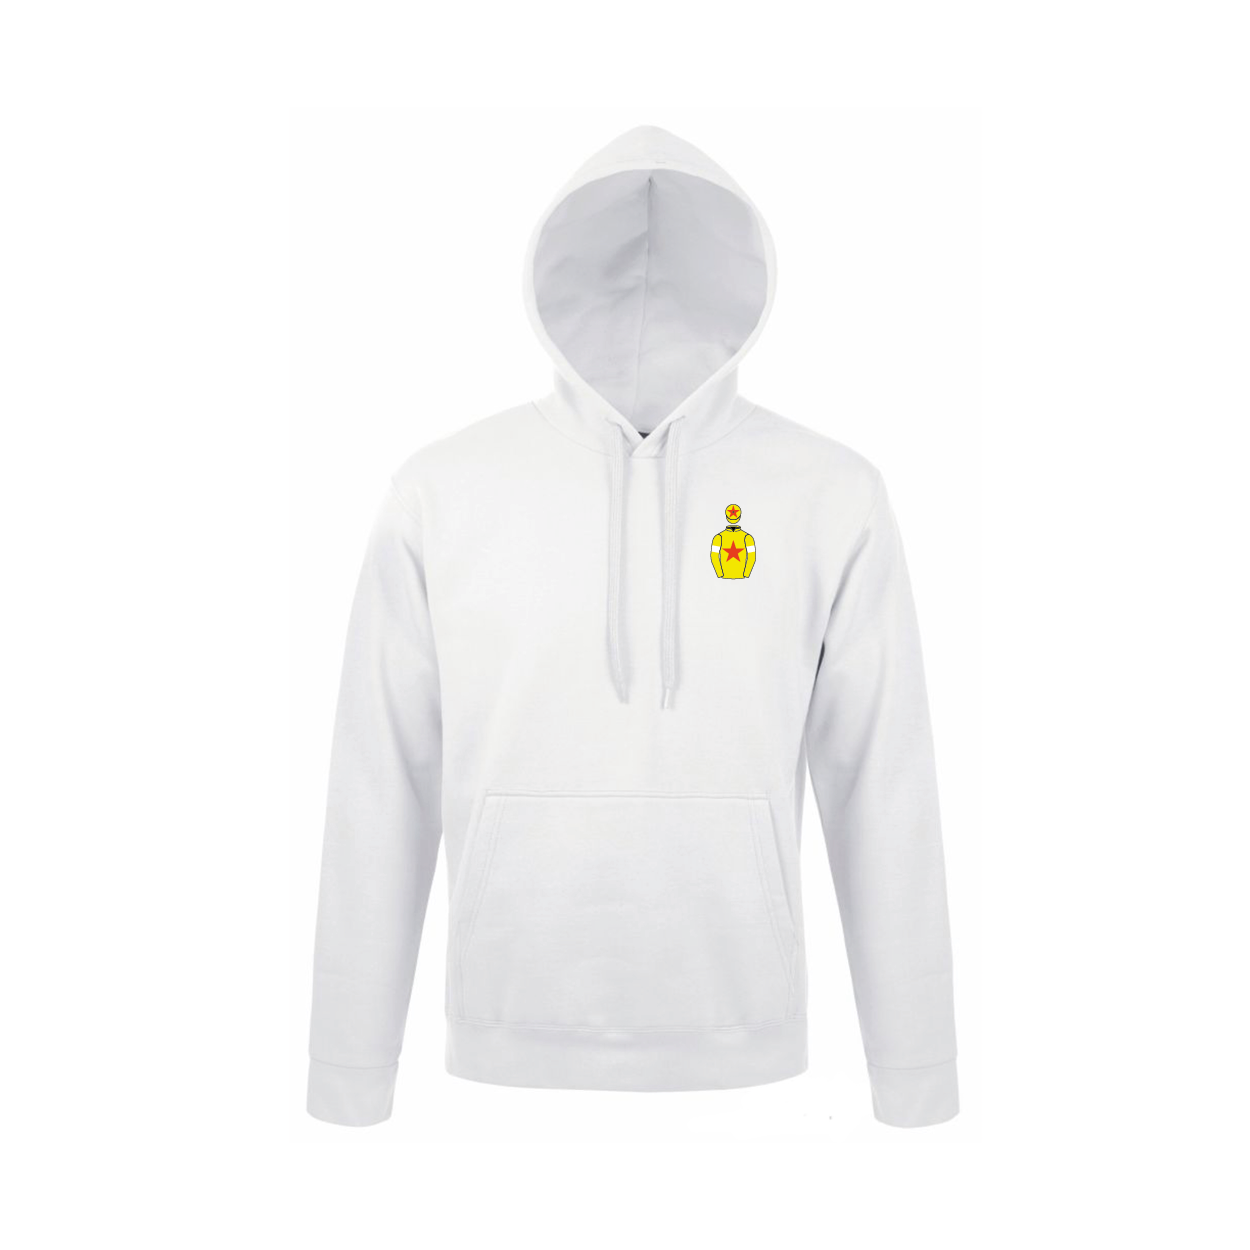 Unisex John Hales Embroidered Hooded Sweatshirt - Clothing - Hacked Up